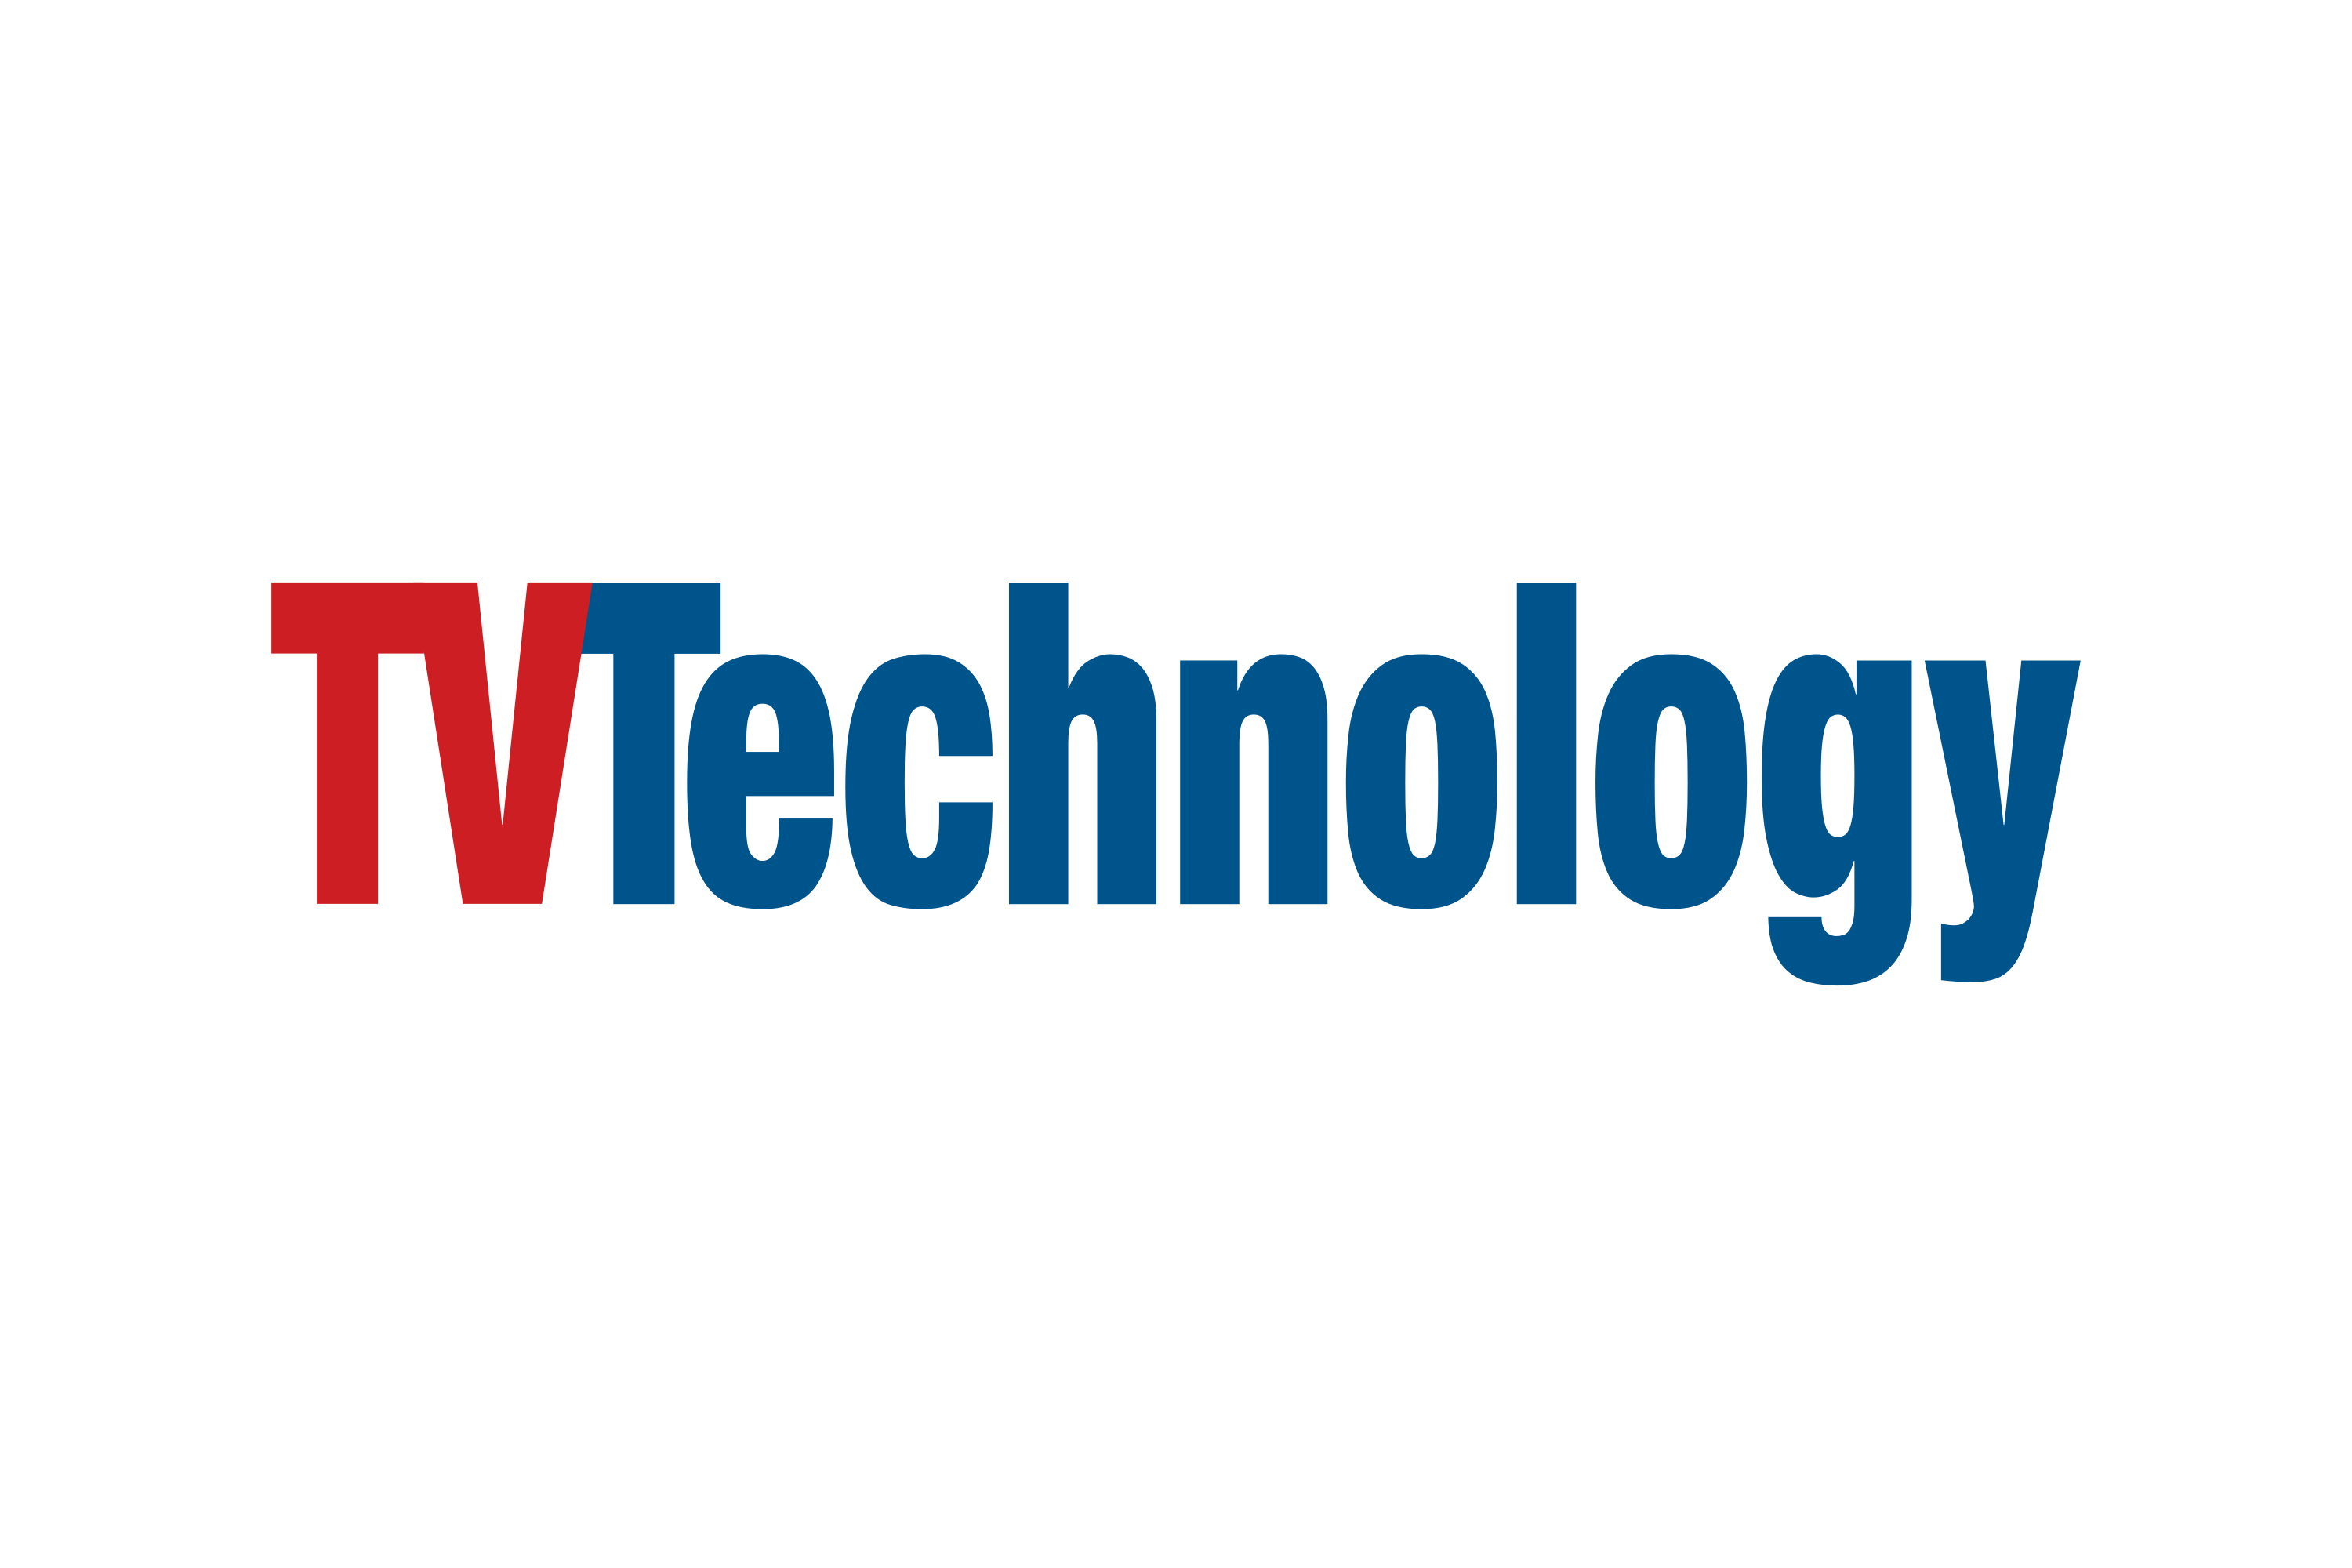 TV Technology Logo